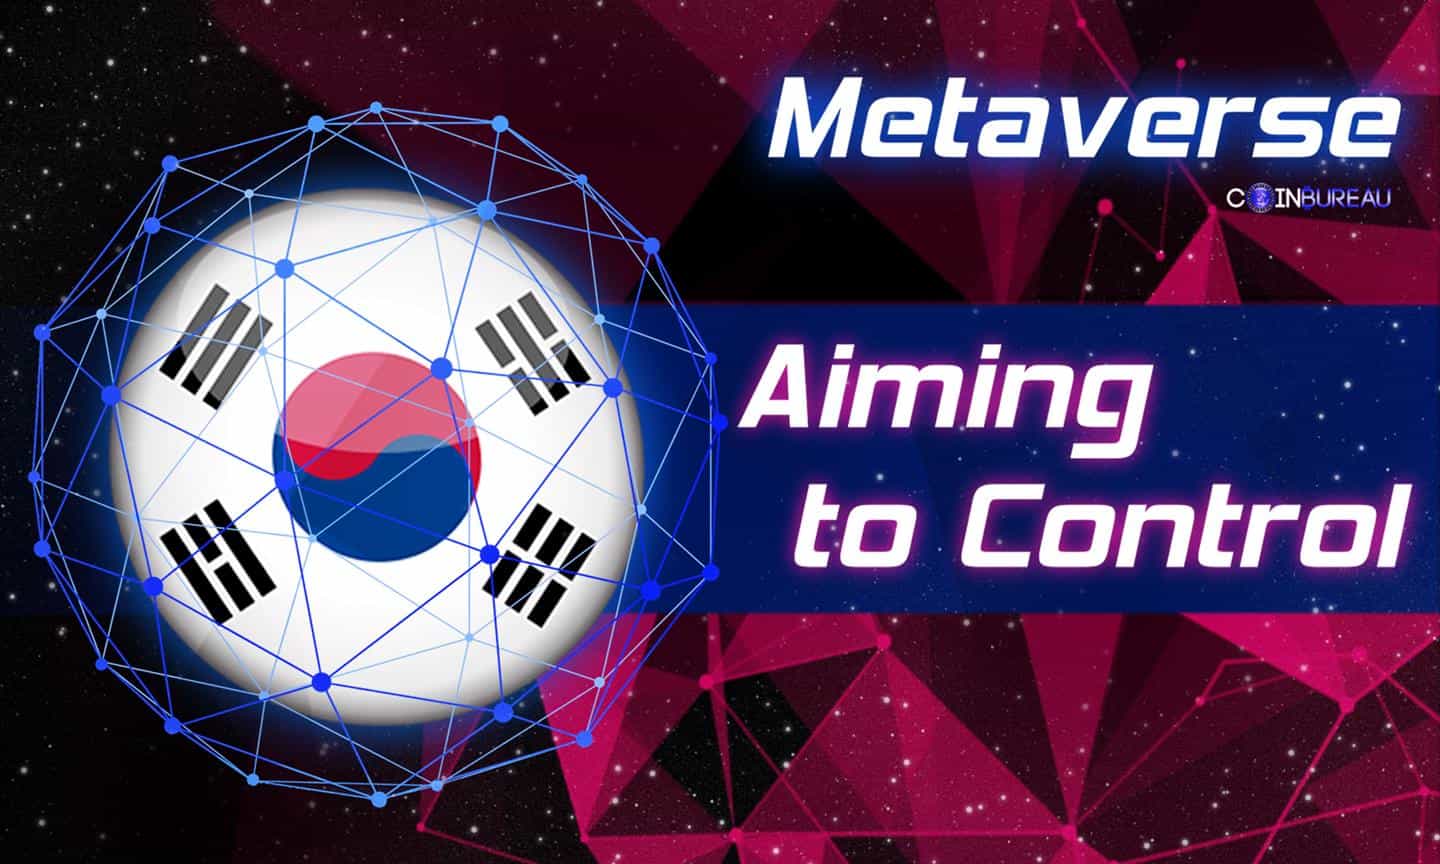 South Korea Aiming to Control the Metaverse